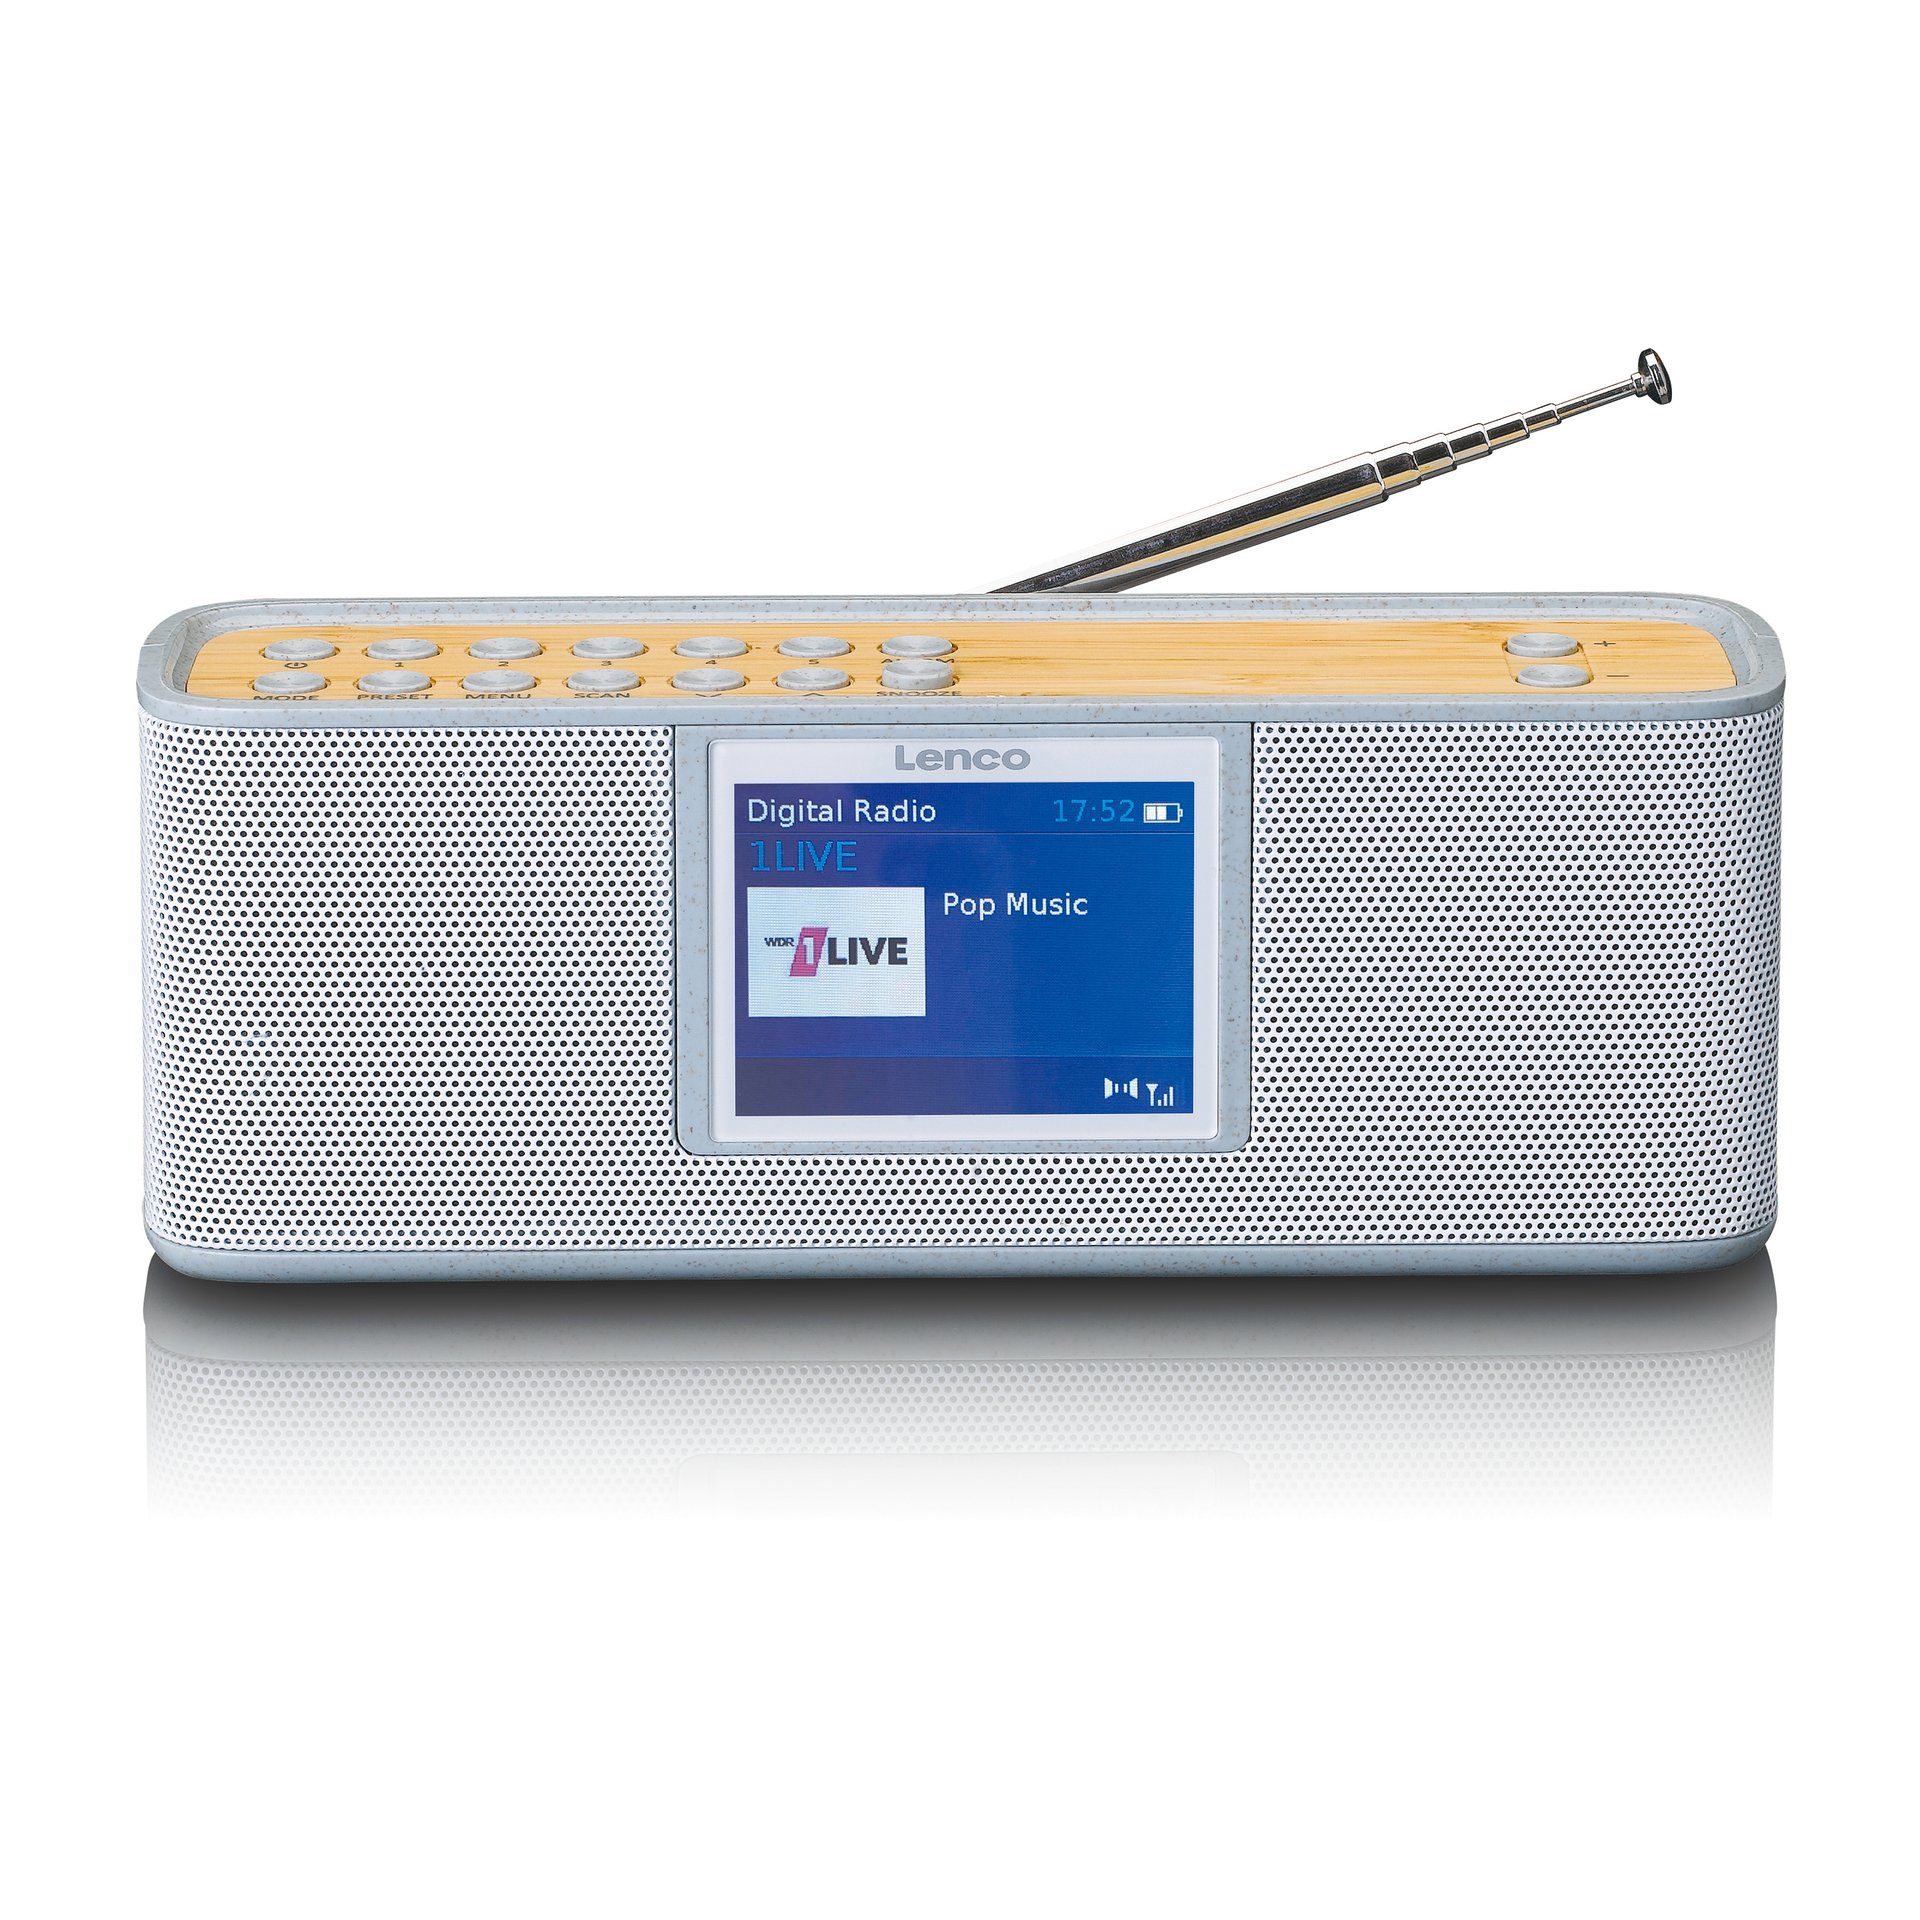 Lenco PDR-046GY - DAB+/FM Radio Digitalradio (DAB) (DAB) (Digitalradio